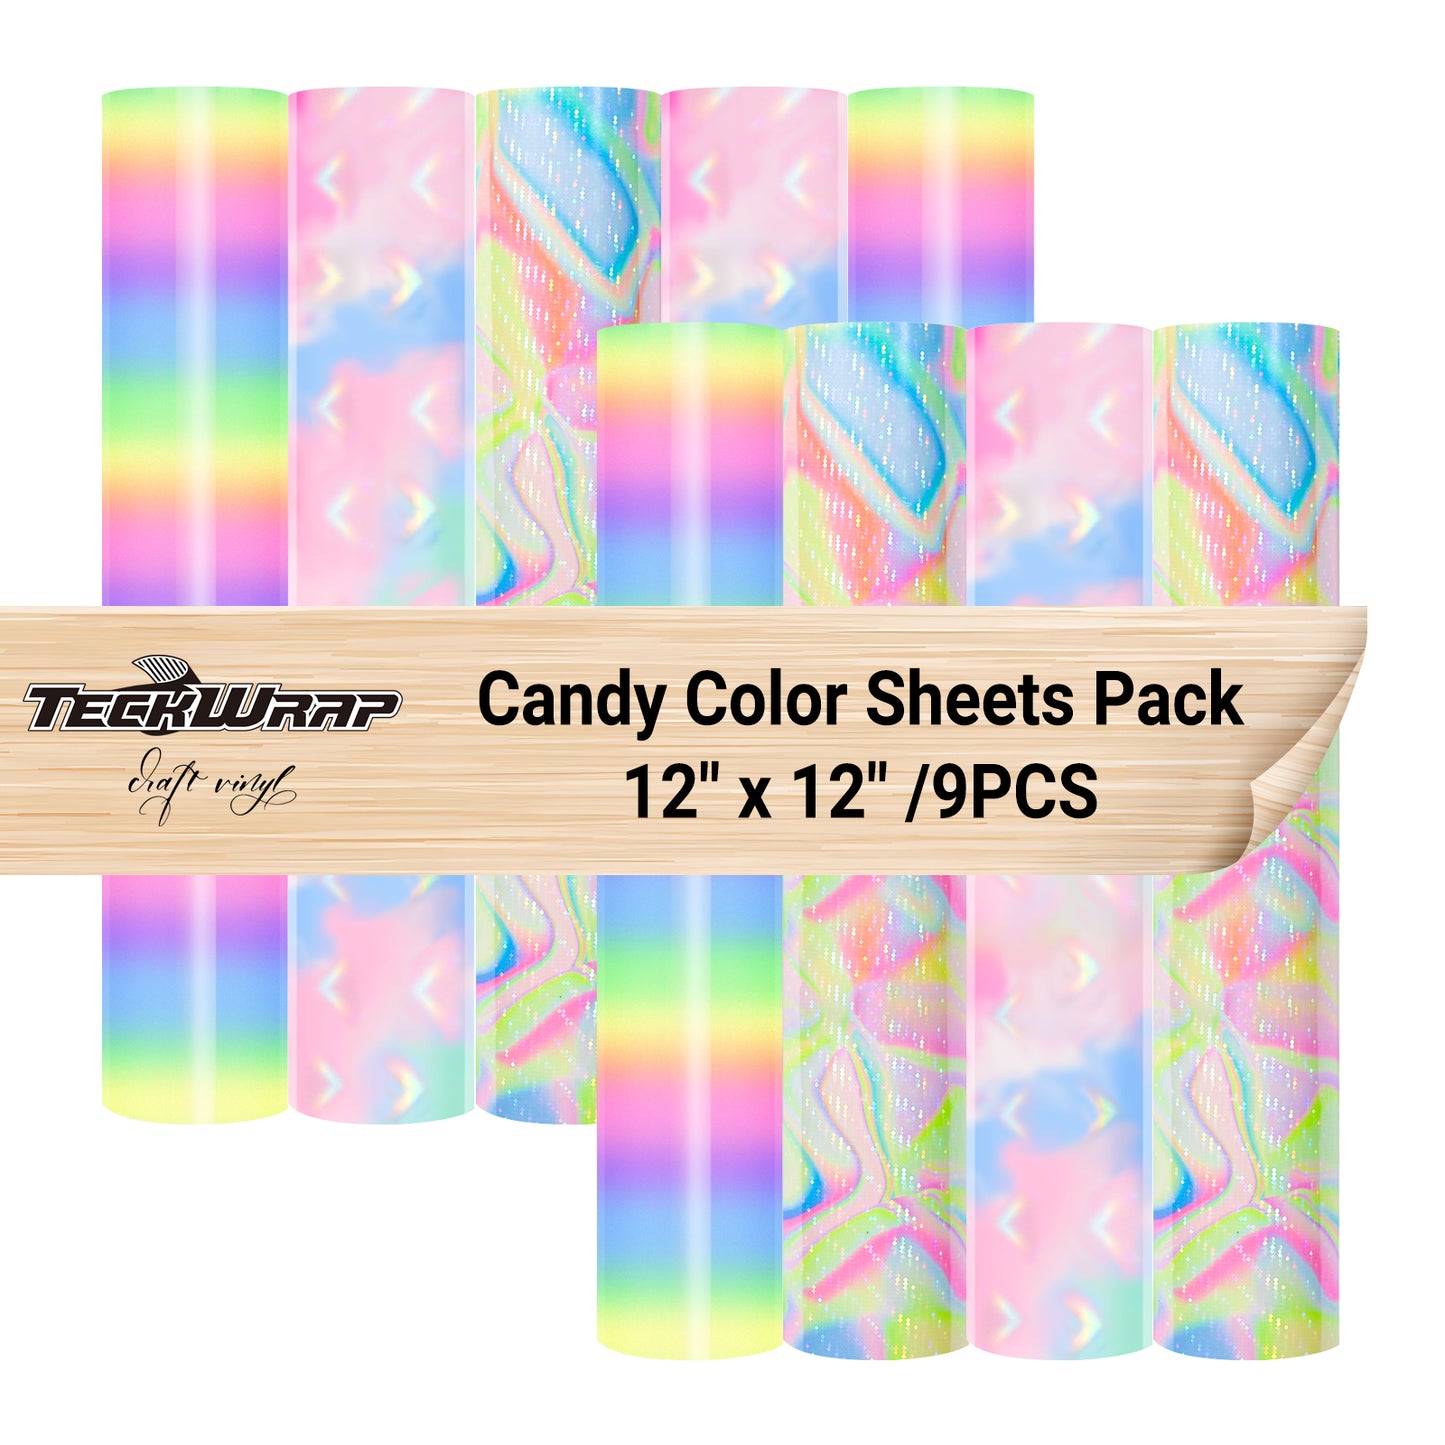 Candy Color Sheets Pack (9 PCS)